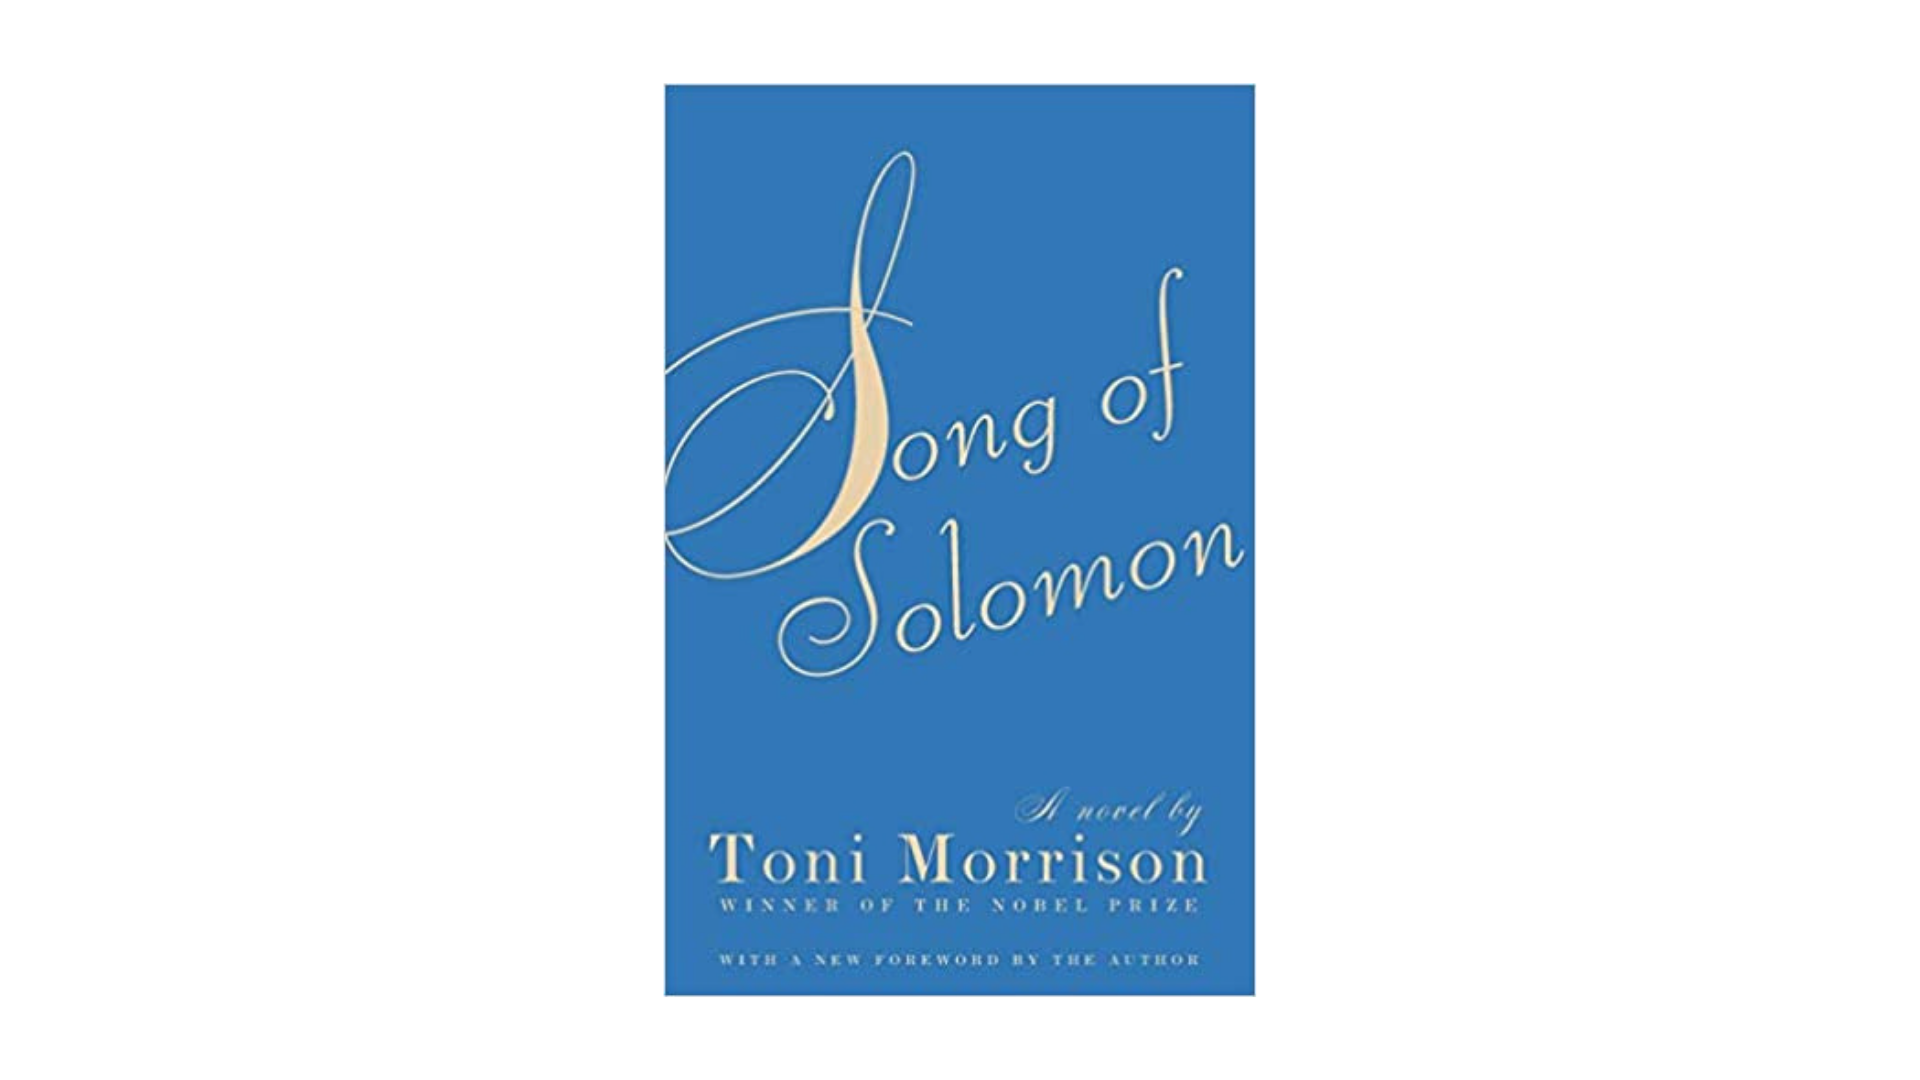 Toni Morrison best books by black authors